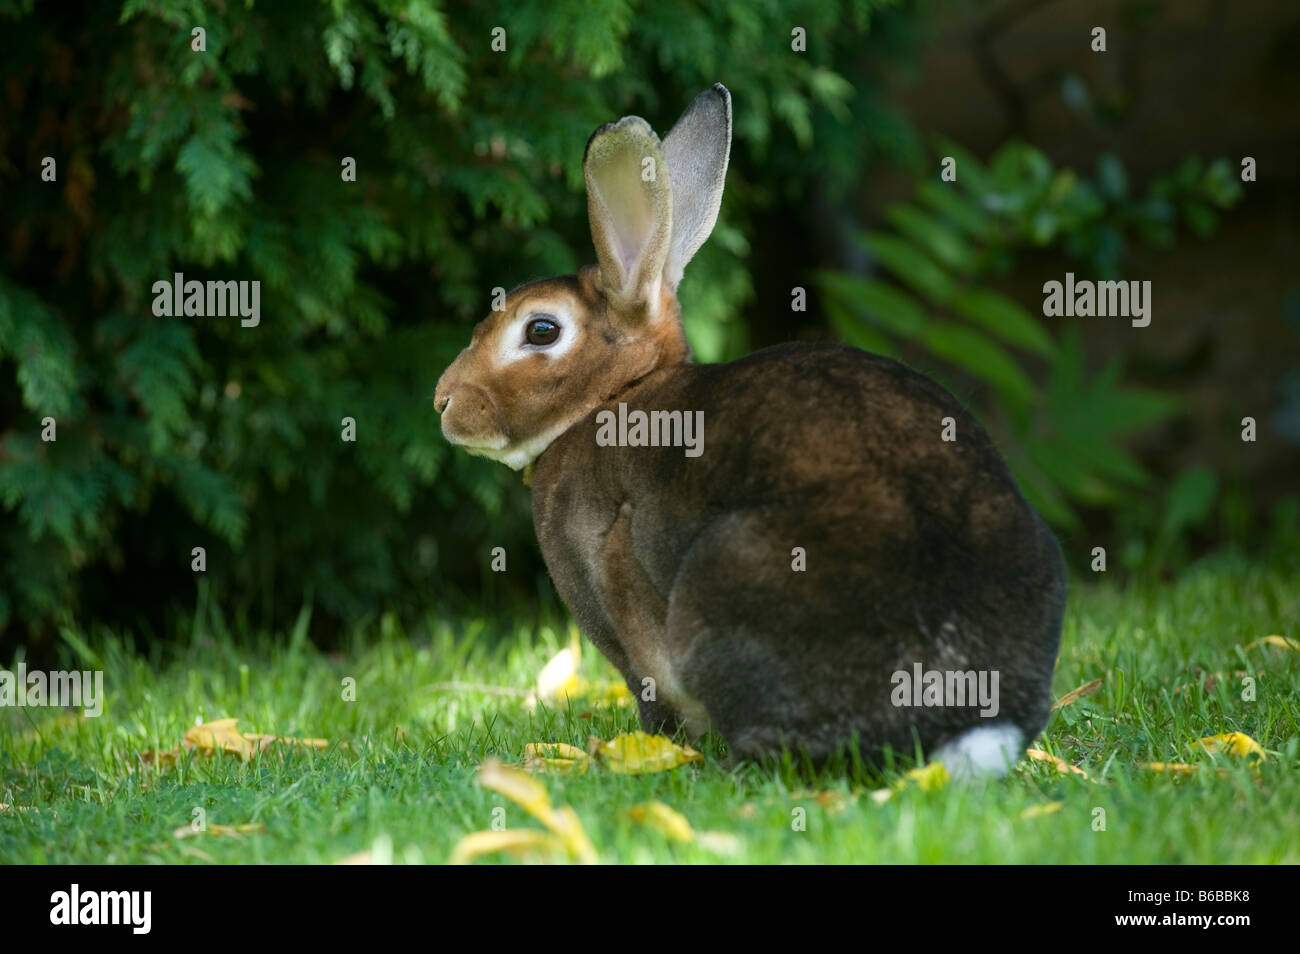 Brown Rex rabbit in the garden Stock Photo